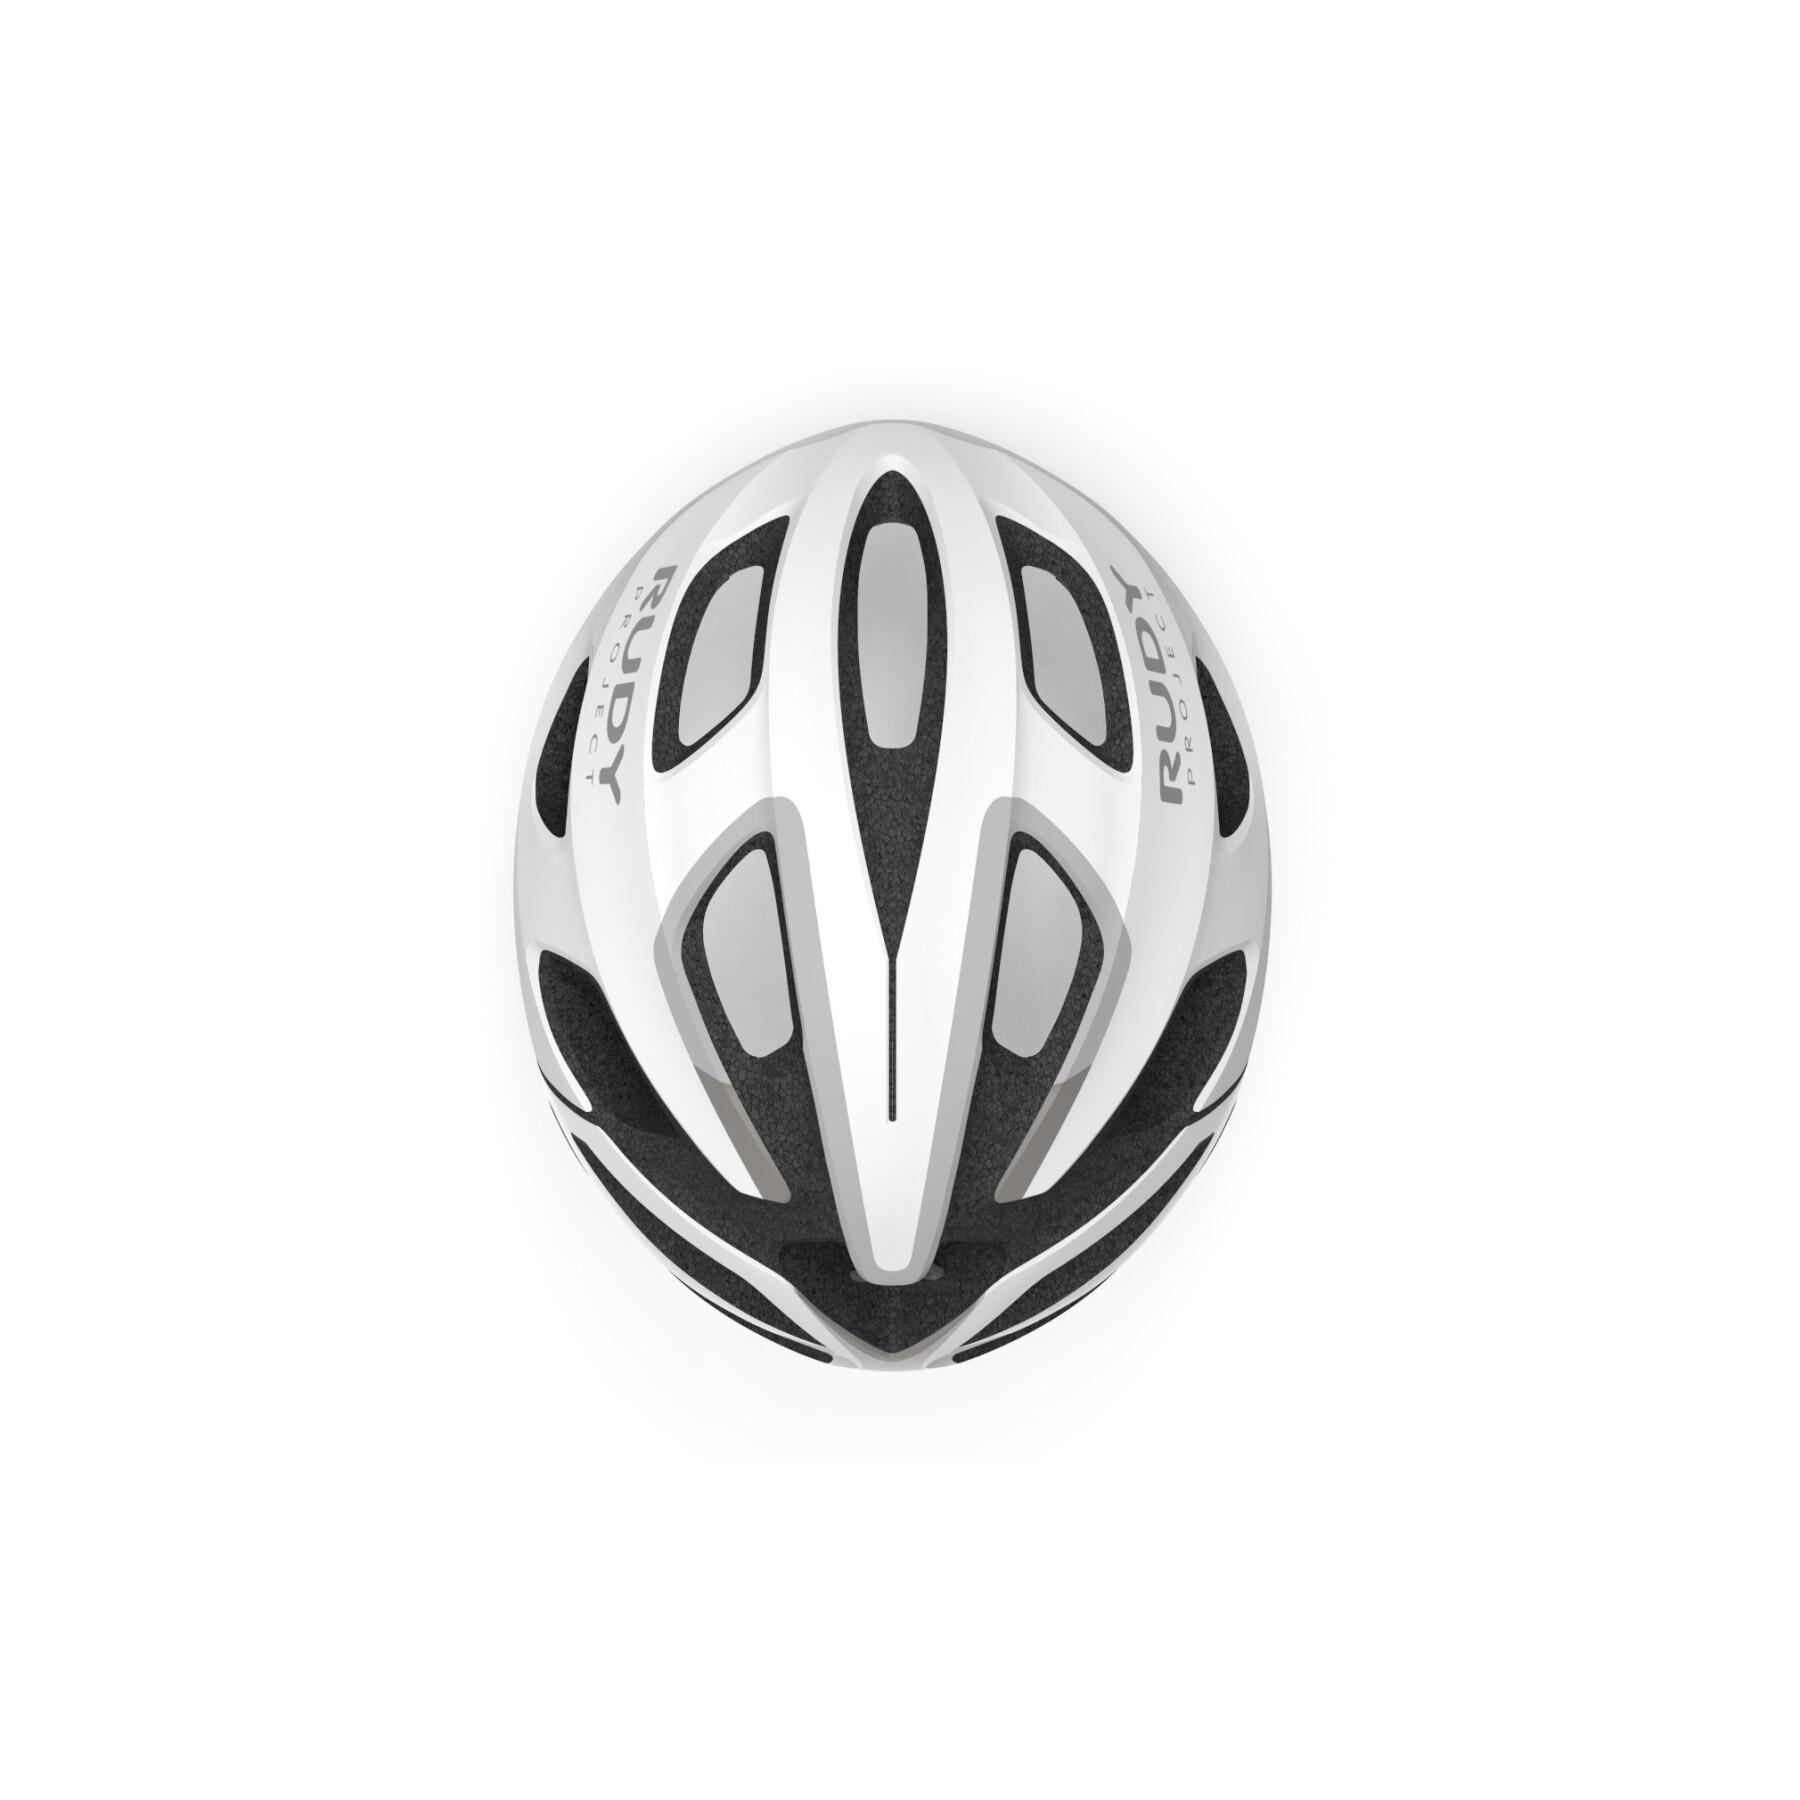 Bike helmet Rudy Project Strym